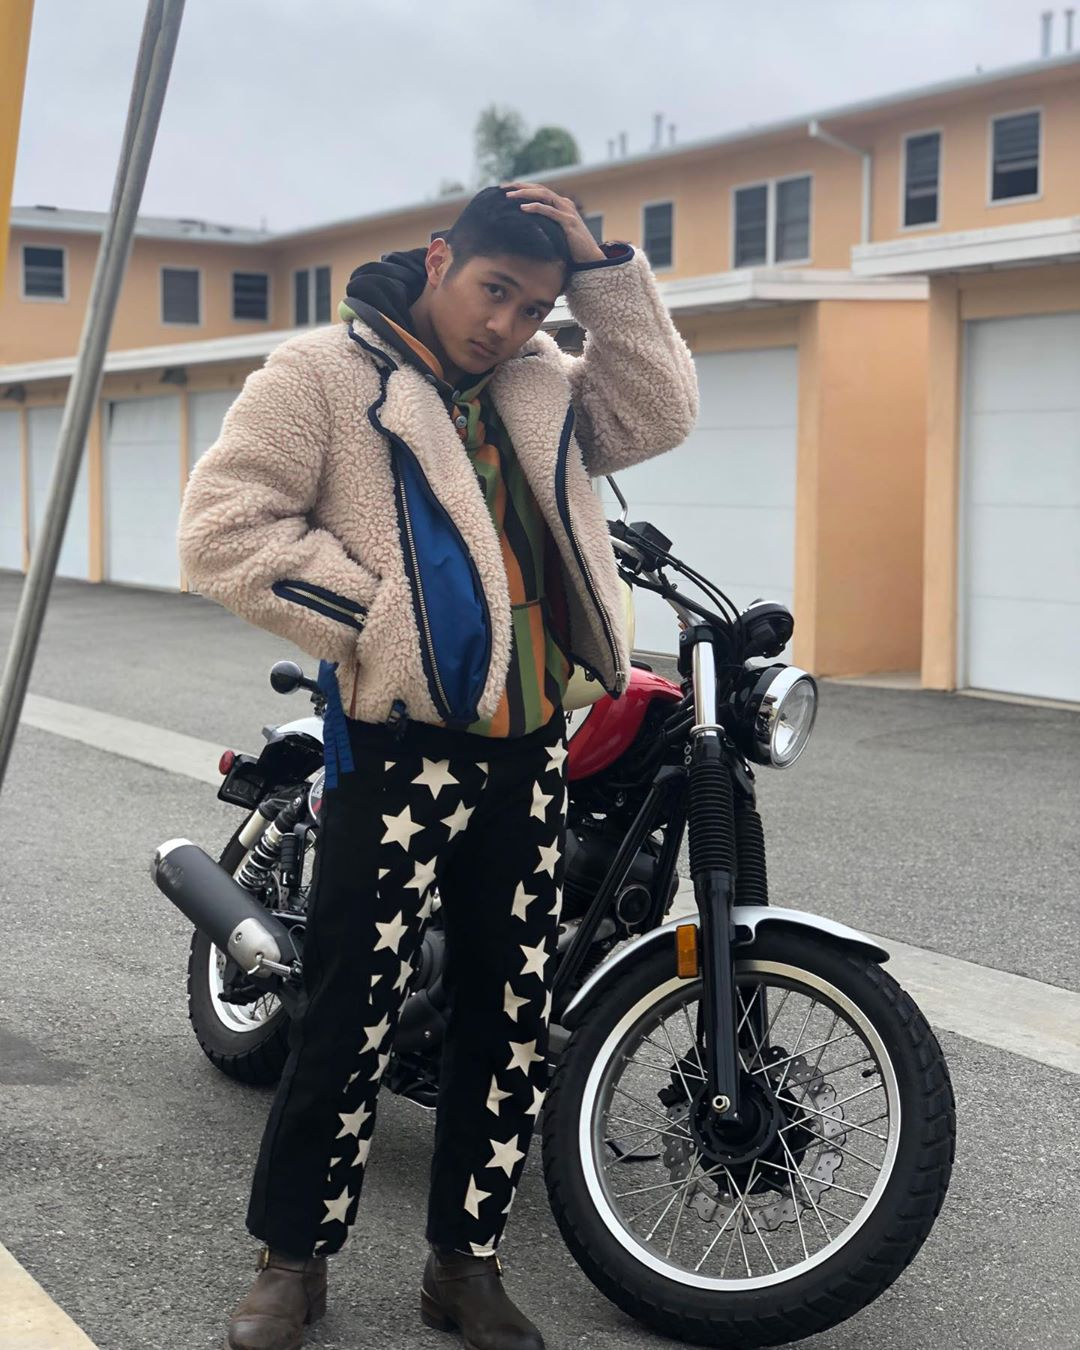 Japanese Fashion on X: Christopher Nemeth pinstripe jacket with